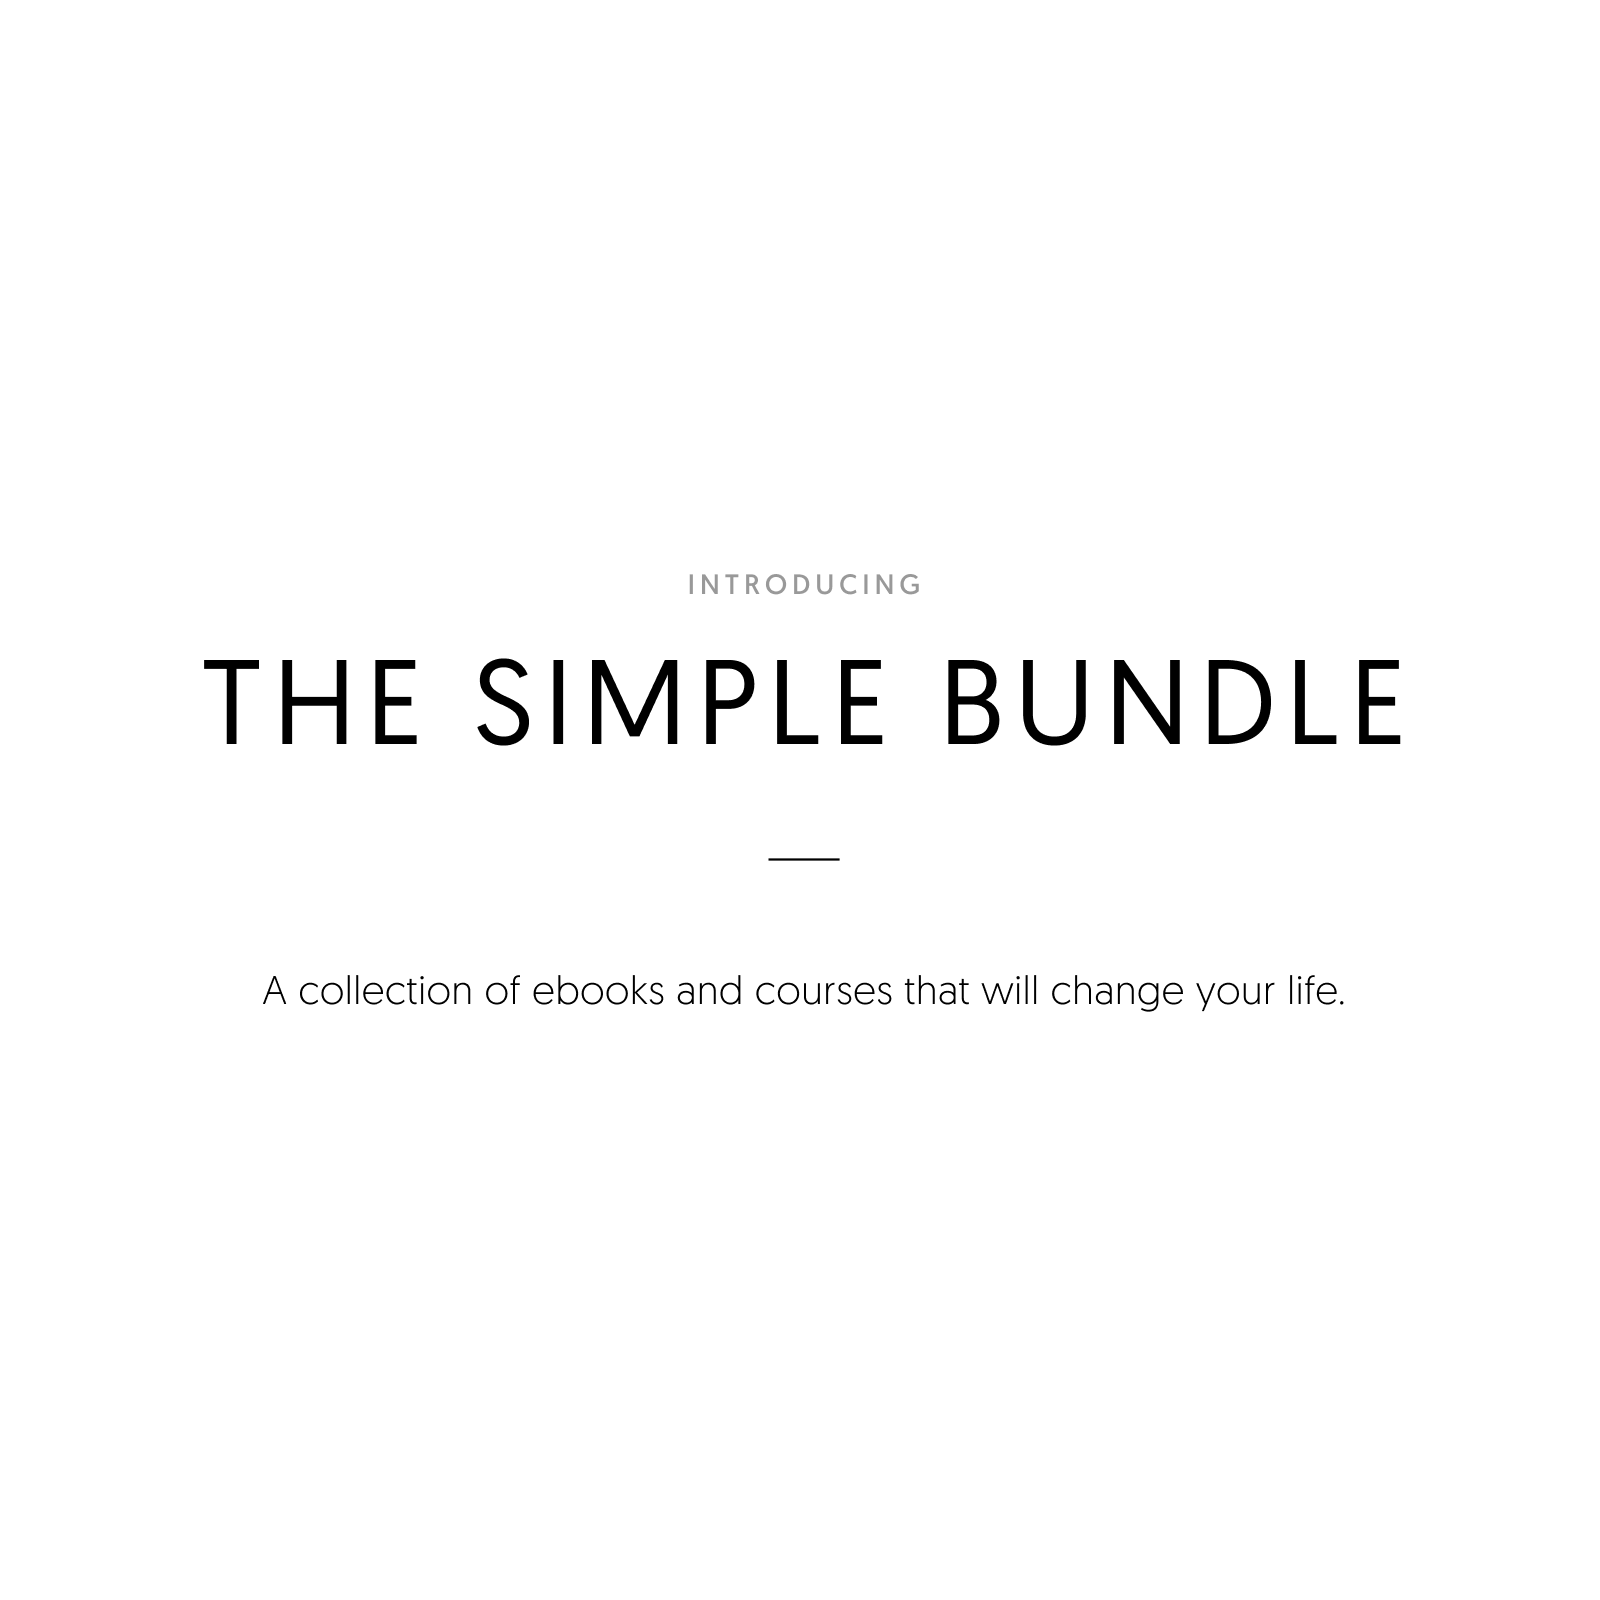 The Simple Bundle